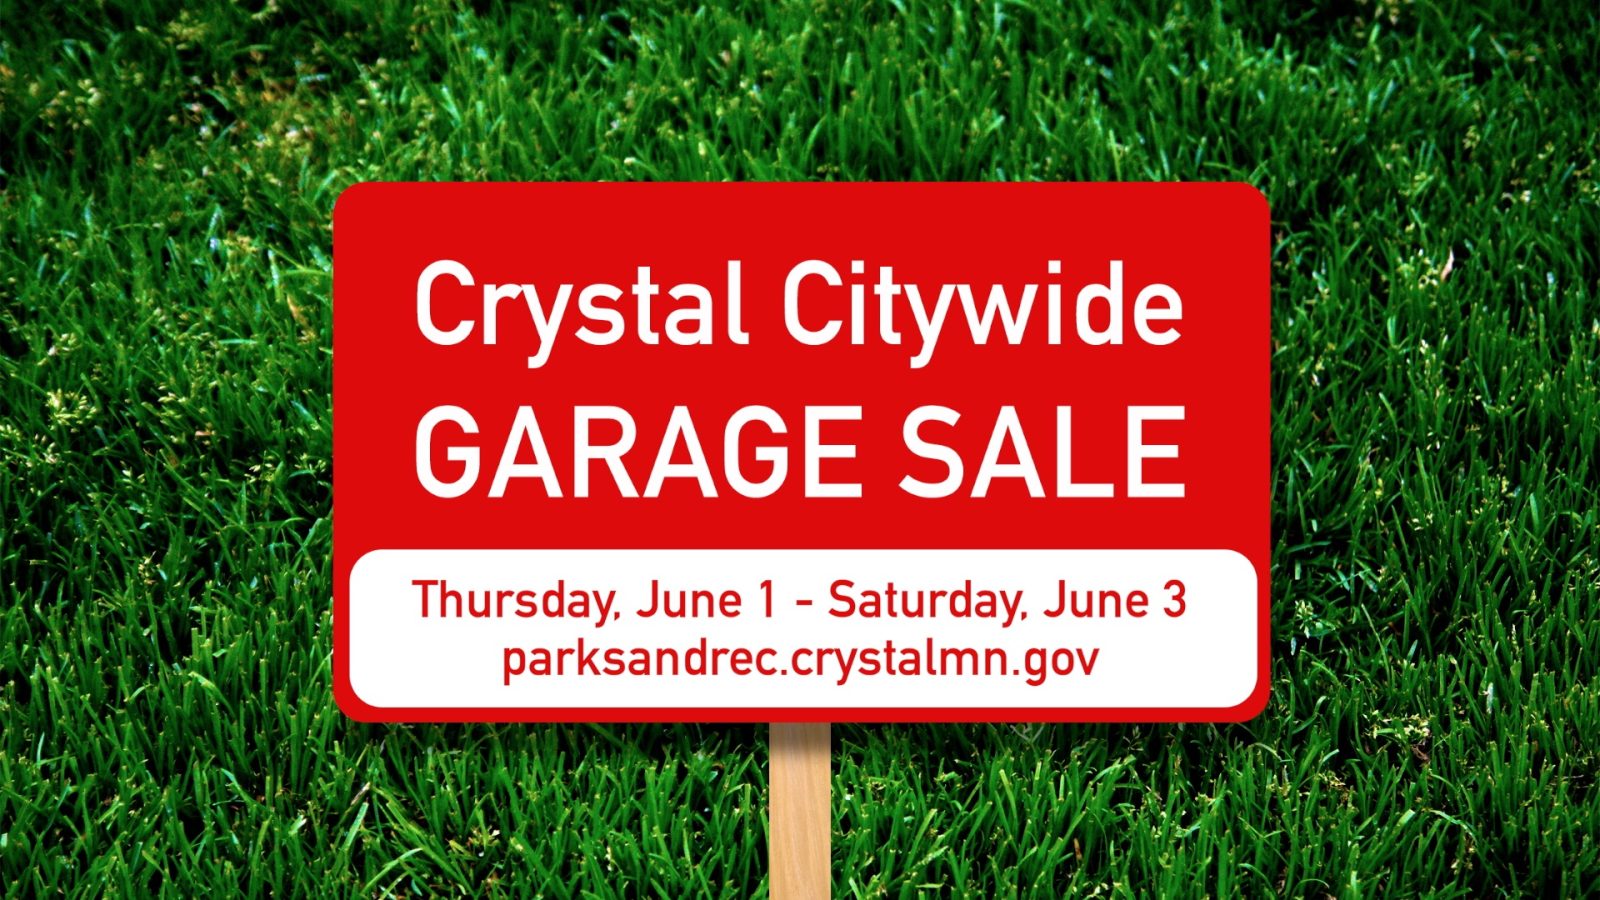 Crystal Citywide Garage Sale Date Information